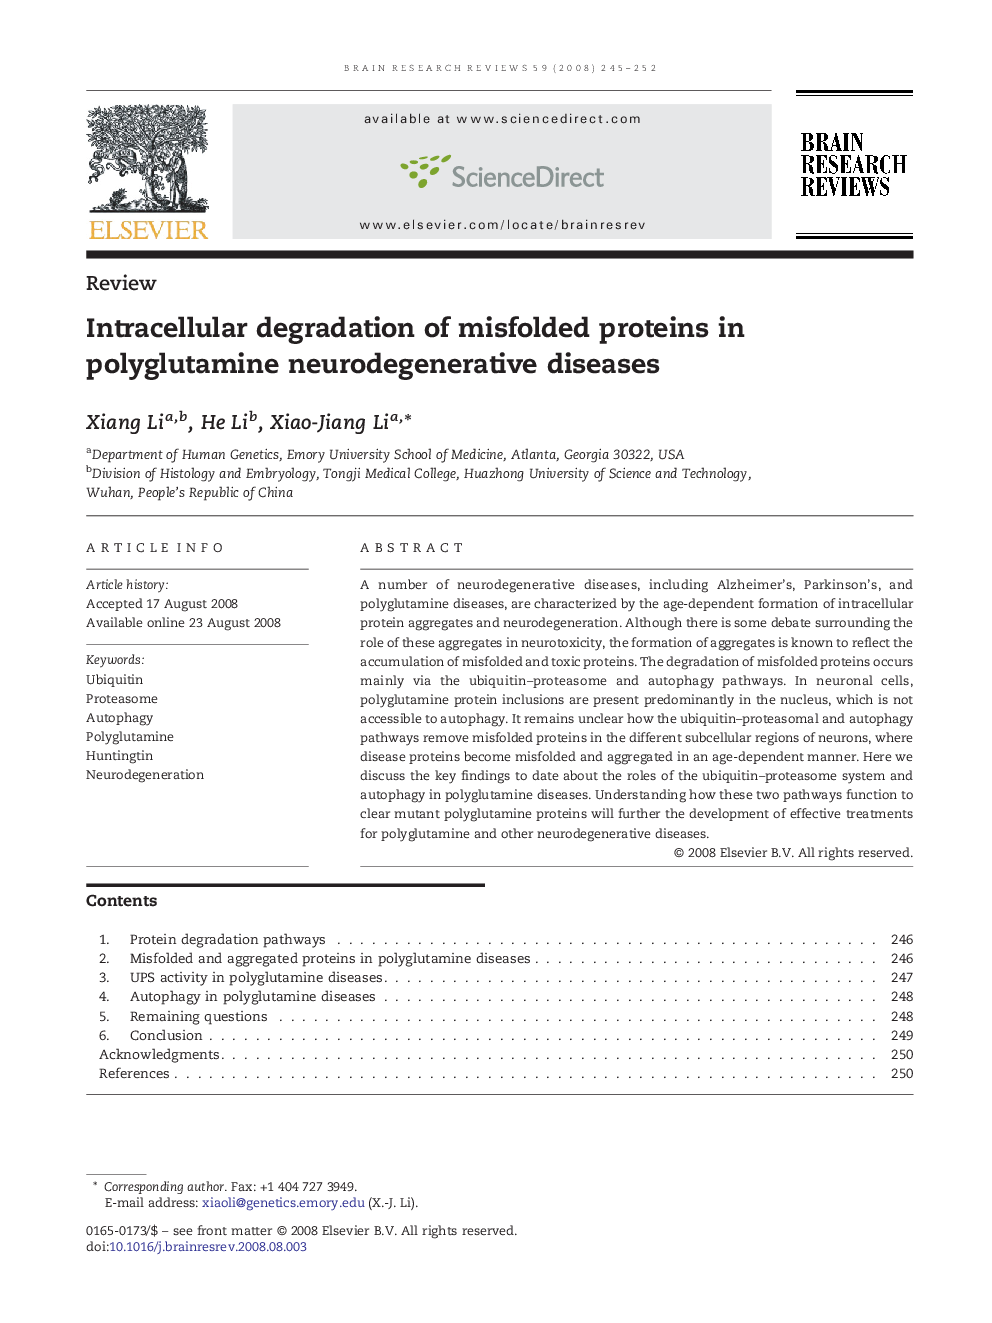 Intracellular degradation of misfolded proteins in polyglutamine neurodegenerative diseases